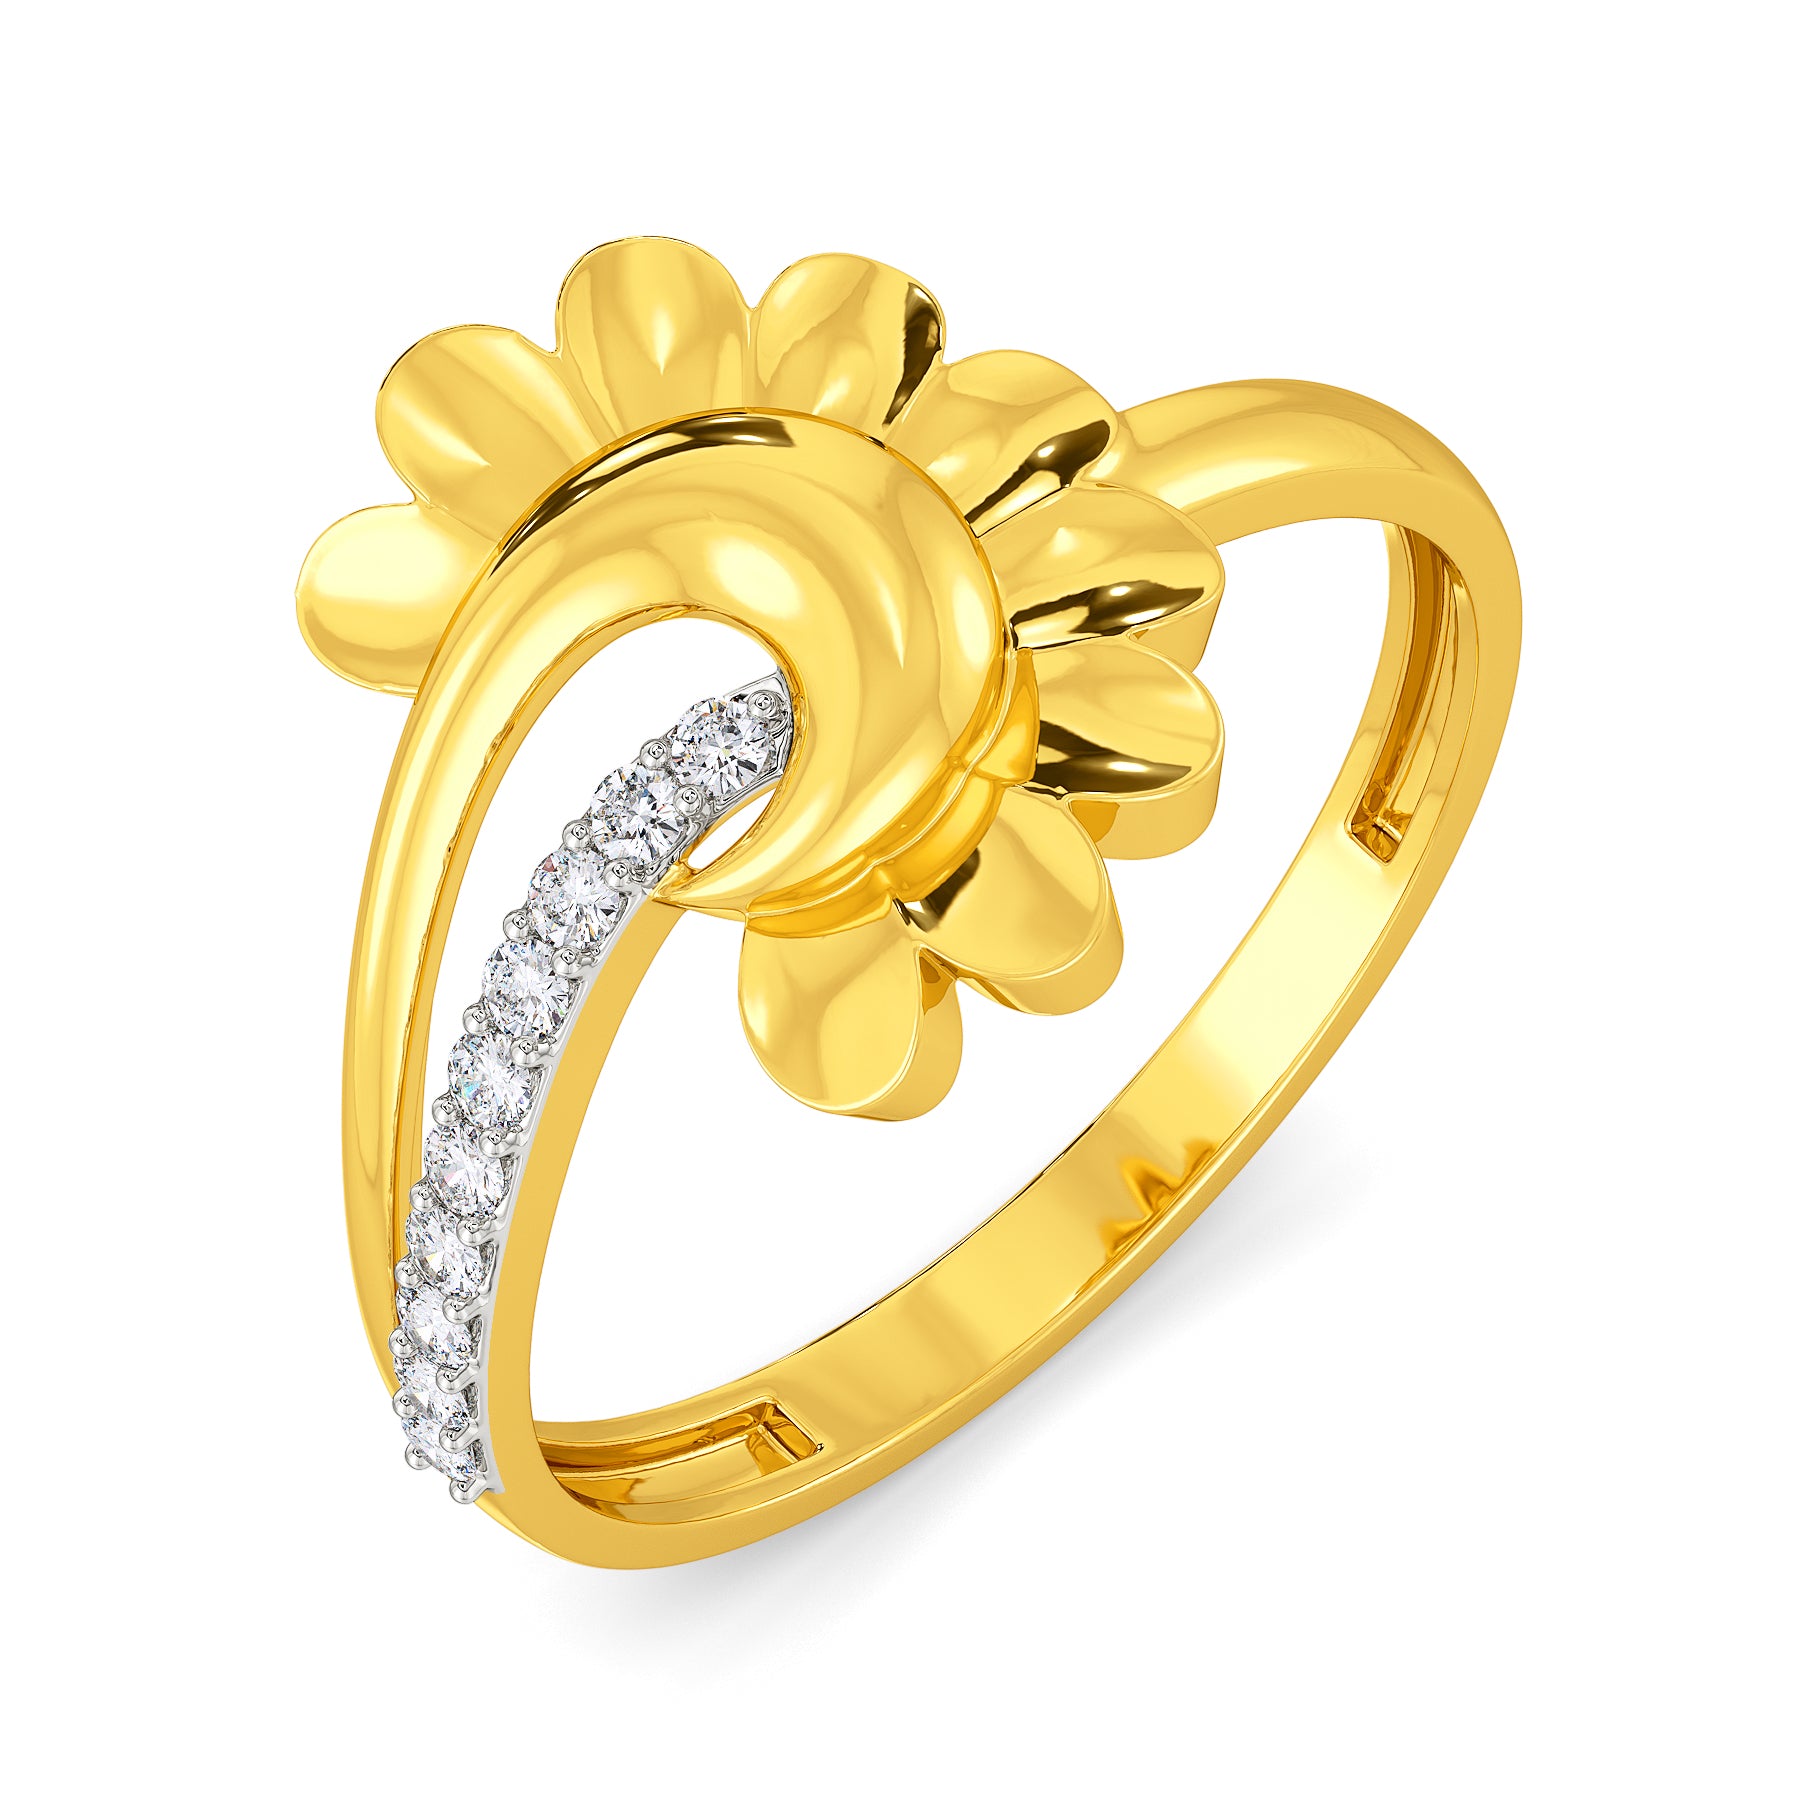 Braas Golden New Model Latest Design Finger Ring Women and Girls at best  price in Mumbai